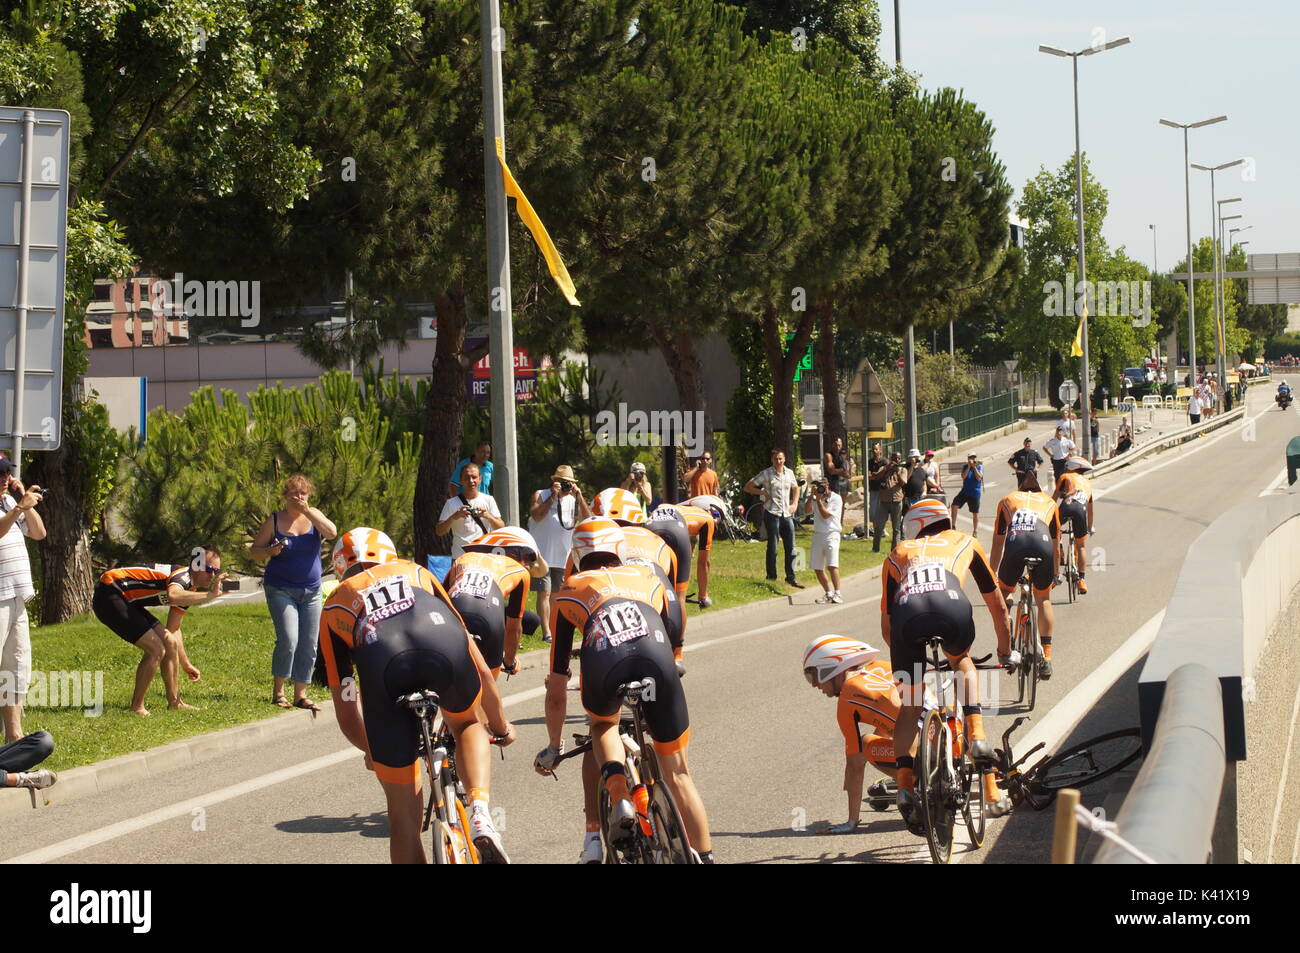 NICE - JULY 2ND : The TOUR 2013  (Tour de France) .EUSKALTEL - EUSKADI Team during Nice/Nice Stage 4 (25 km). N° 116, Nieve iturralde Mikel, is fallin Stock Photo